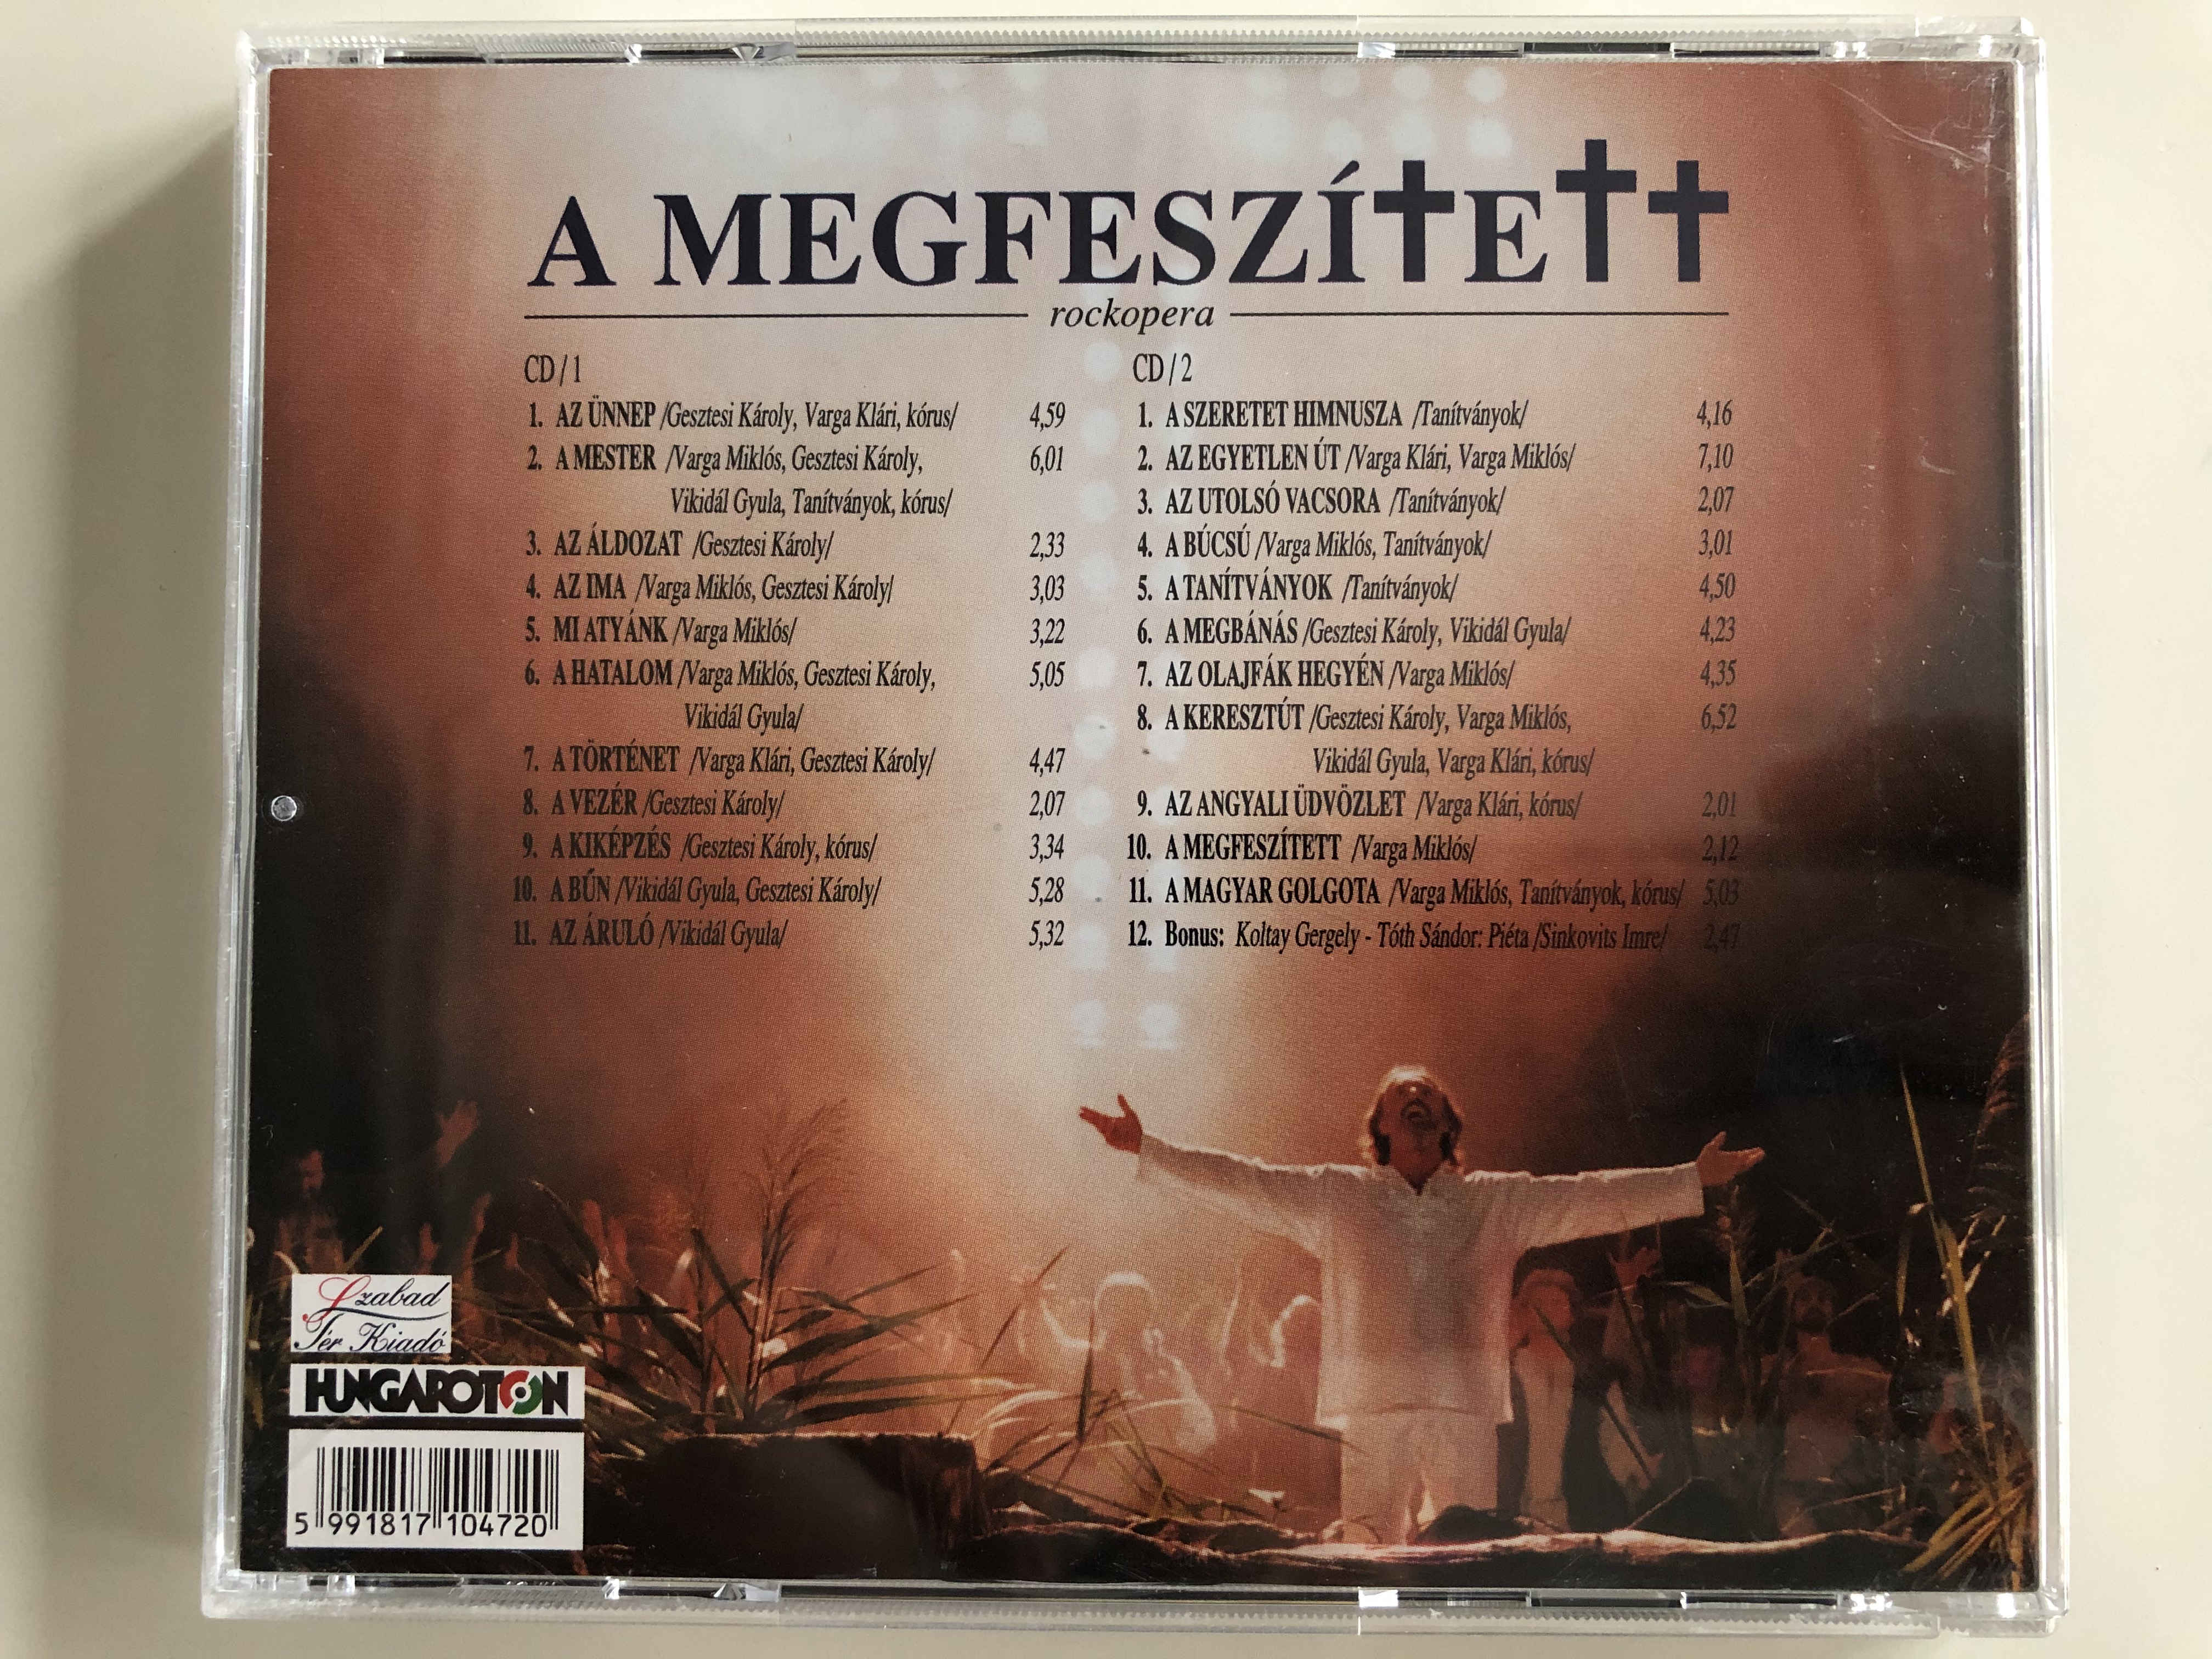 a-megfesz-tett-rockopera-kormor-n-hungaroton-2x-audio-cd-2000-hcd-71047-hcd-71048-10-.jpg